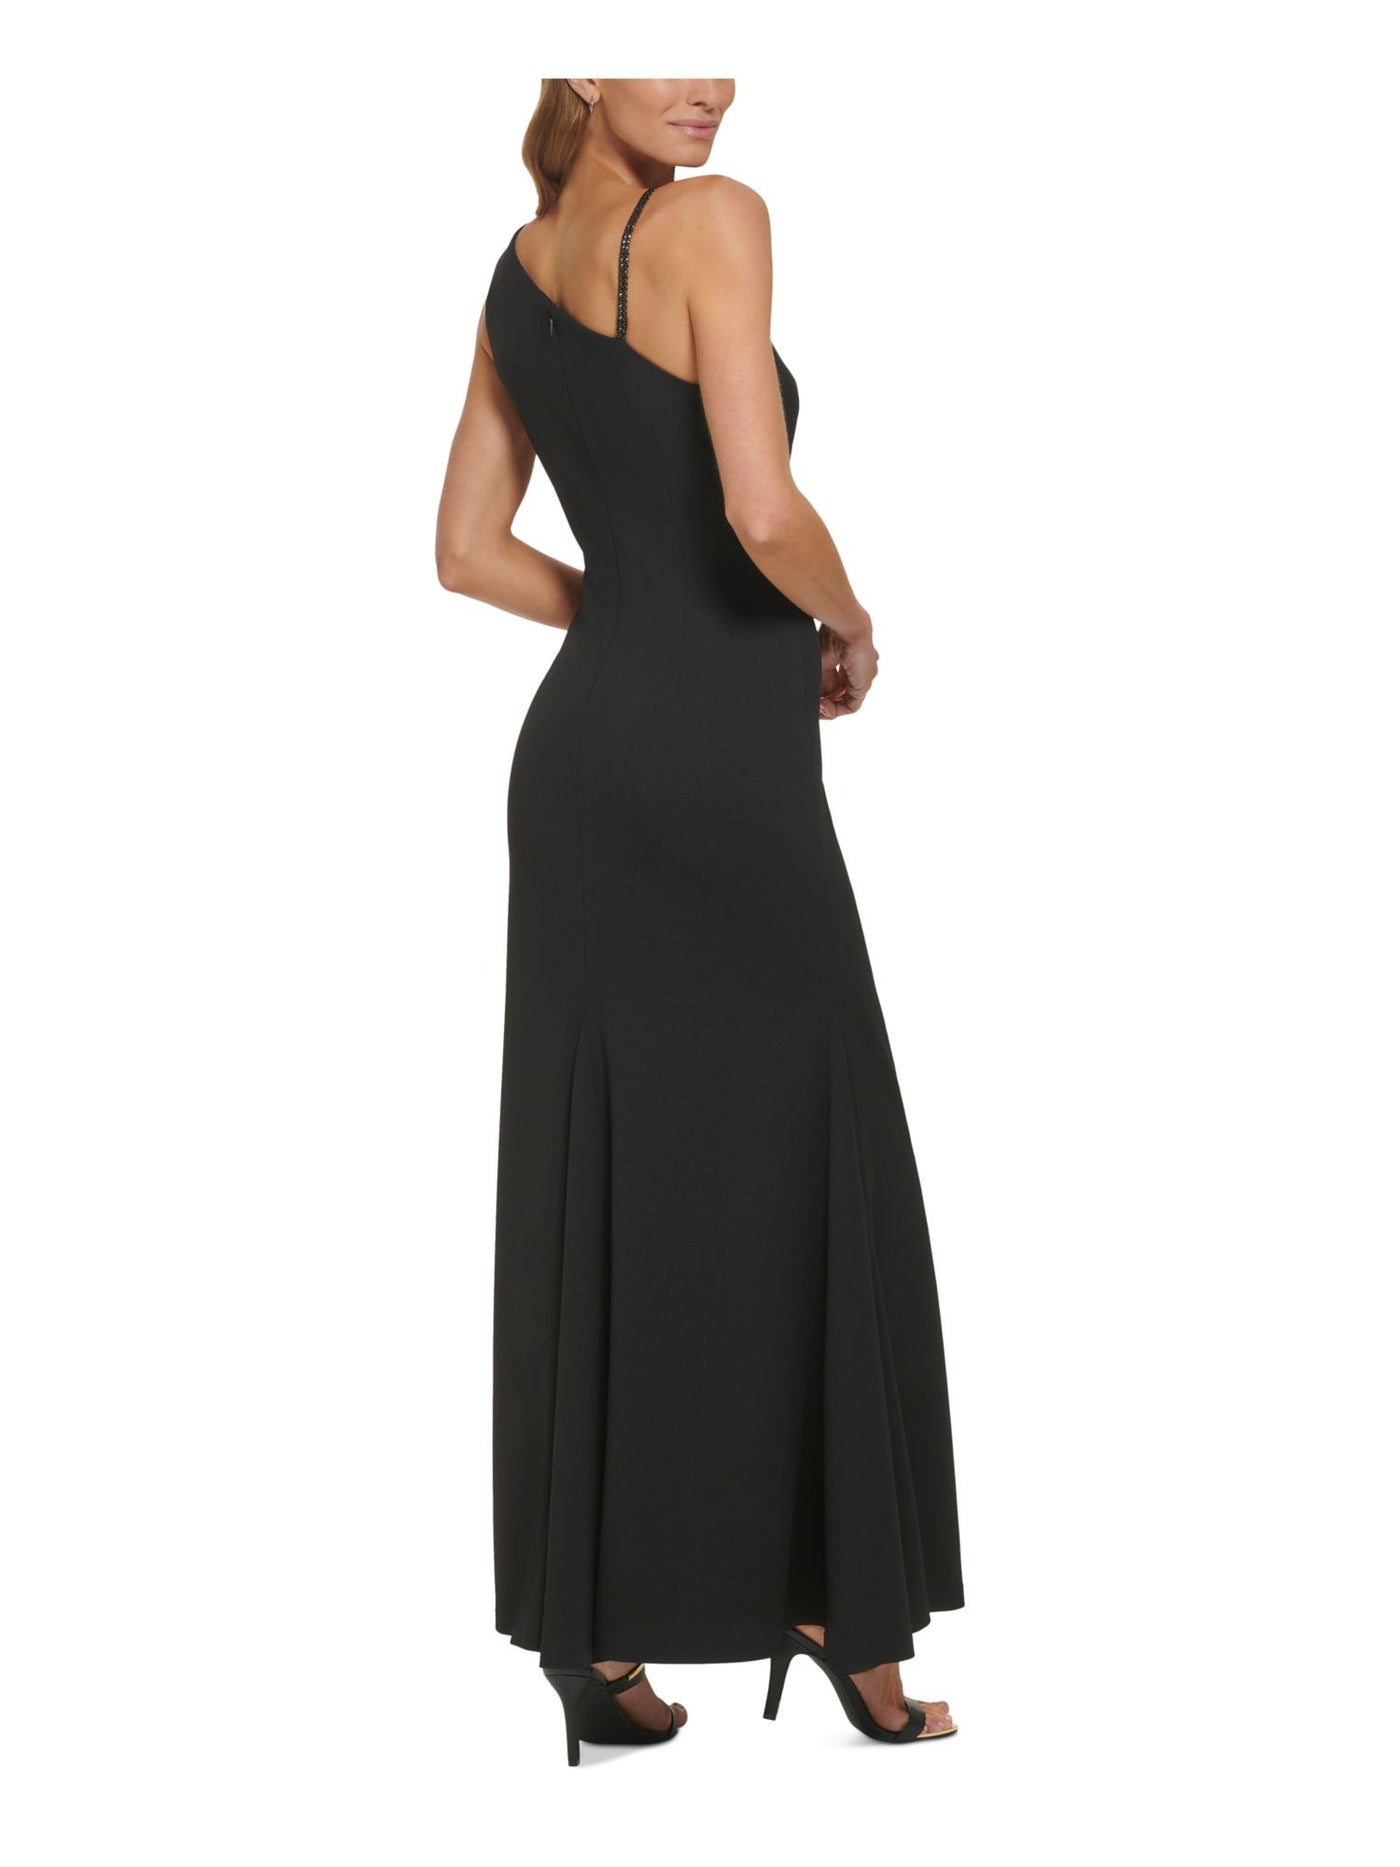 DKNY Womens Black Rhinestone Zippered Lined Darted Sleeveless Asymmetrical Neckline Full-Length Formal Mermaid Dress 6